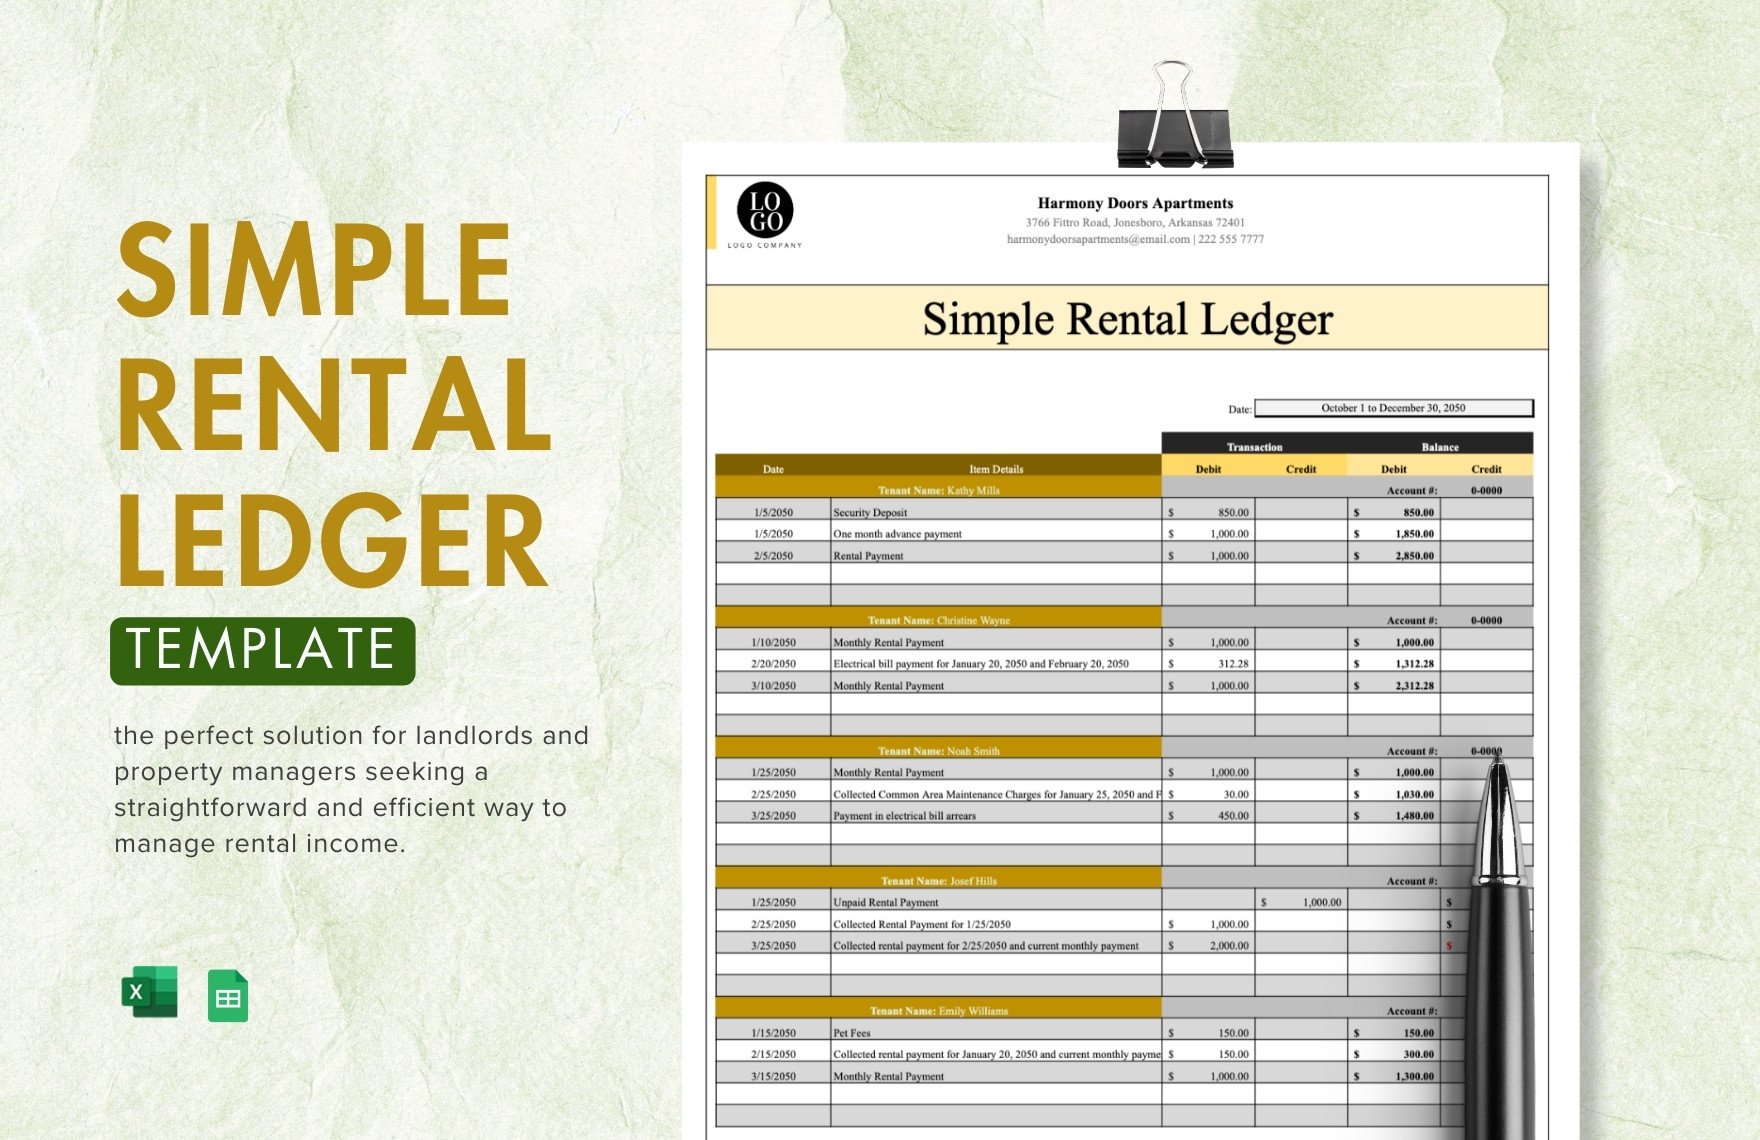 Simple Rental Ledger Template in Excel, Google Sheets